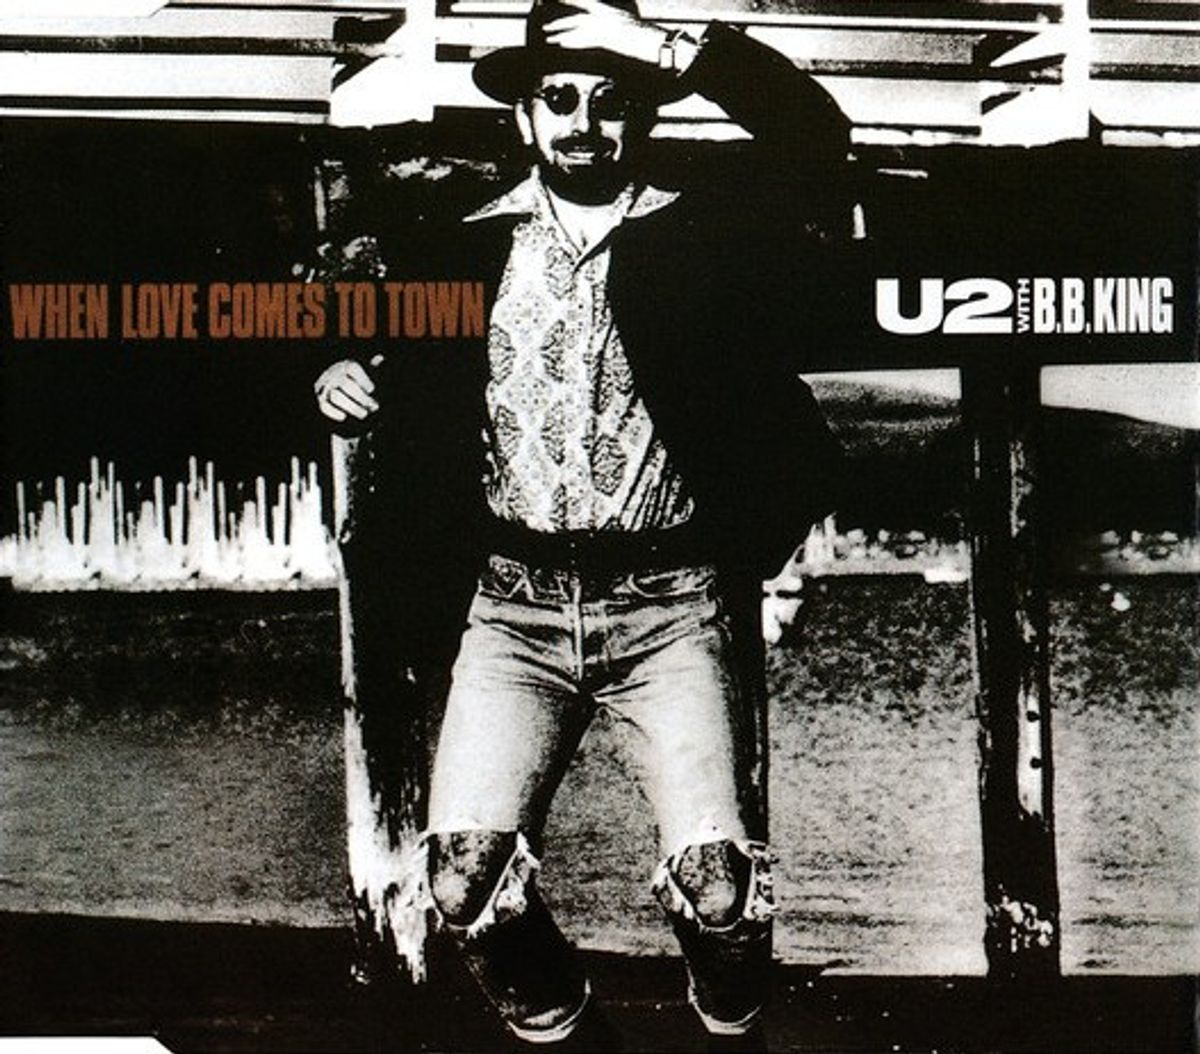 #TweeAkkoordenRock - U2 & B.B. King - When Love Comes To Town(1988)